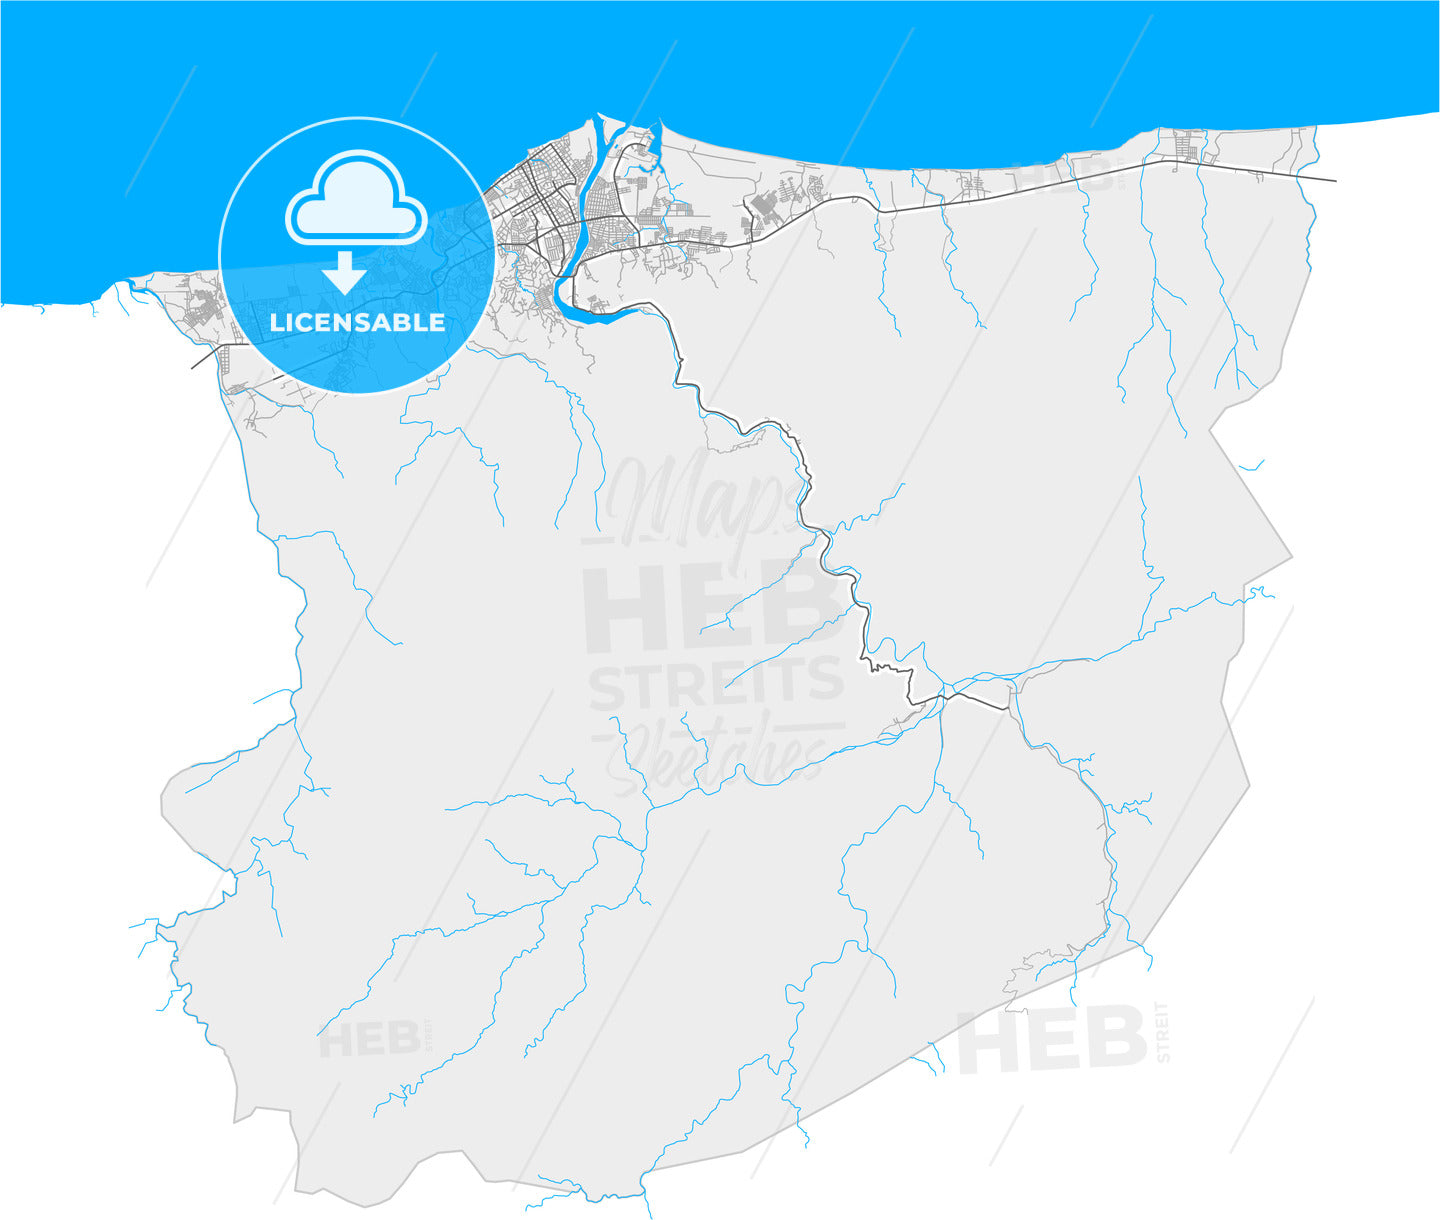 La Ceiba, Atlántida, Honduras, high quality vector map